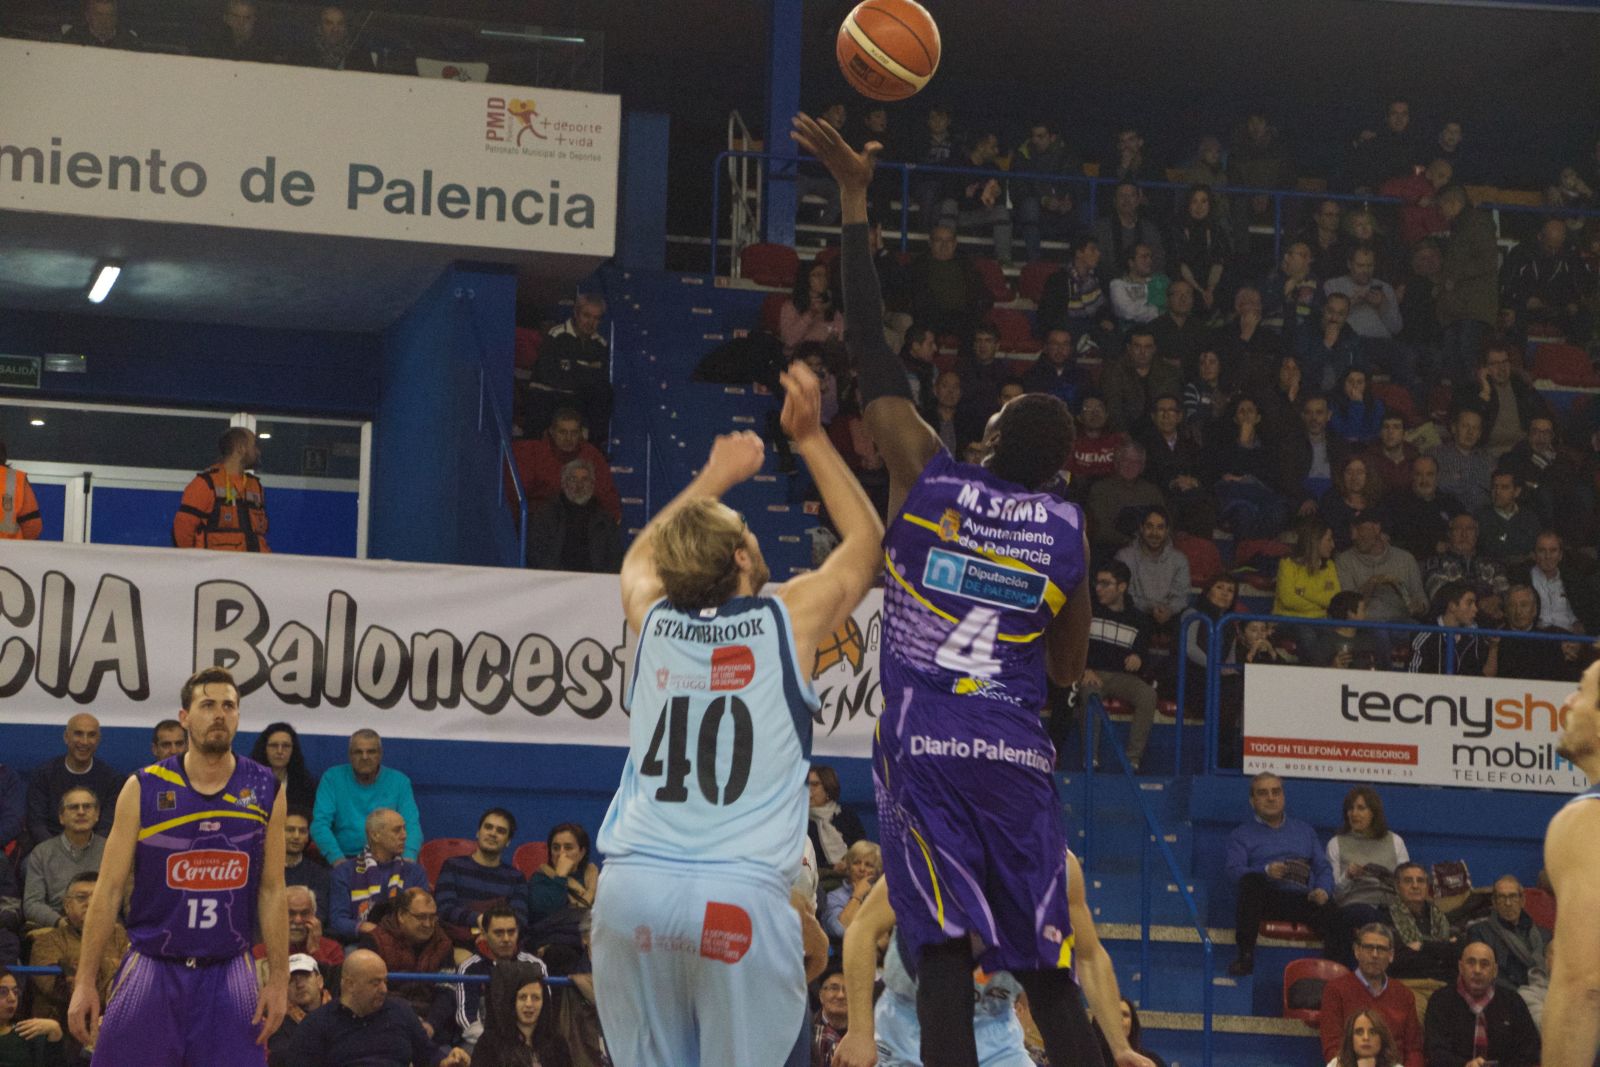 Cuarta consecutiva para Palencia, frente a un rival directo, que le coloca colider | Foto Palencia Basket